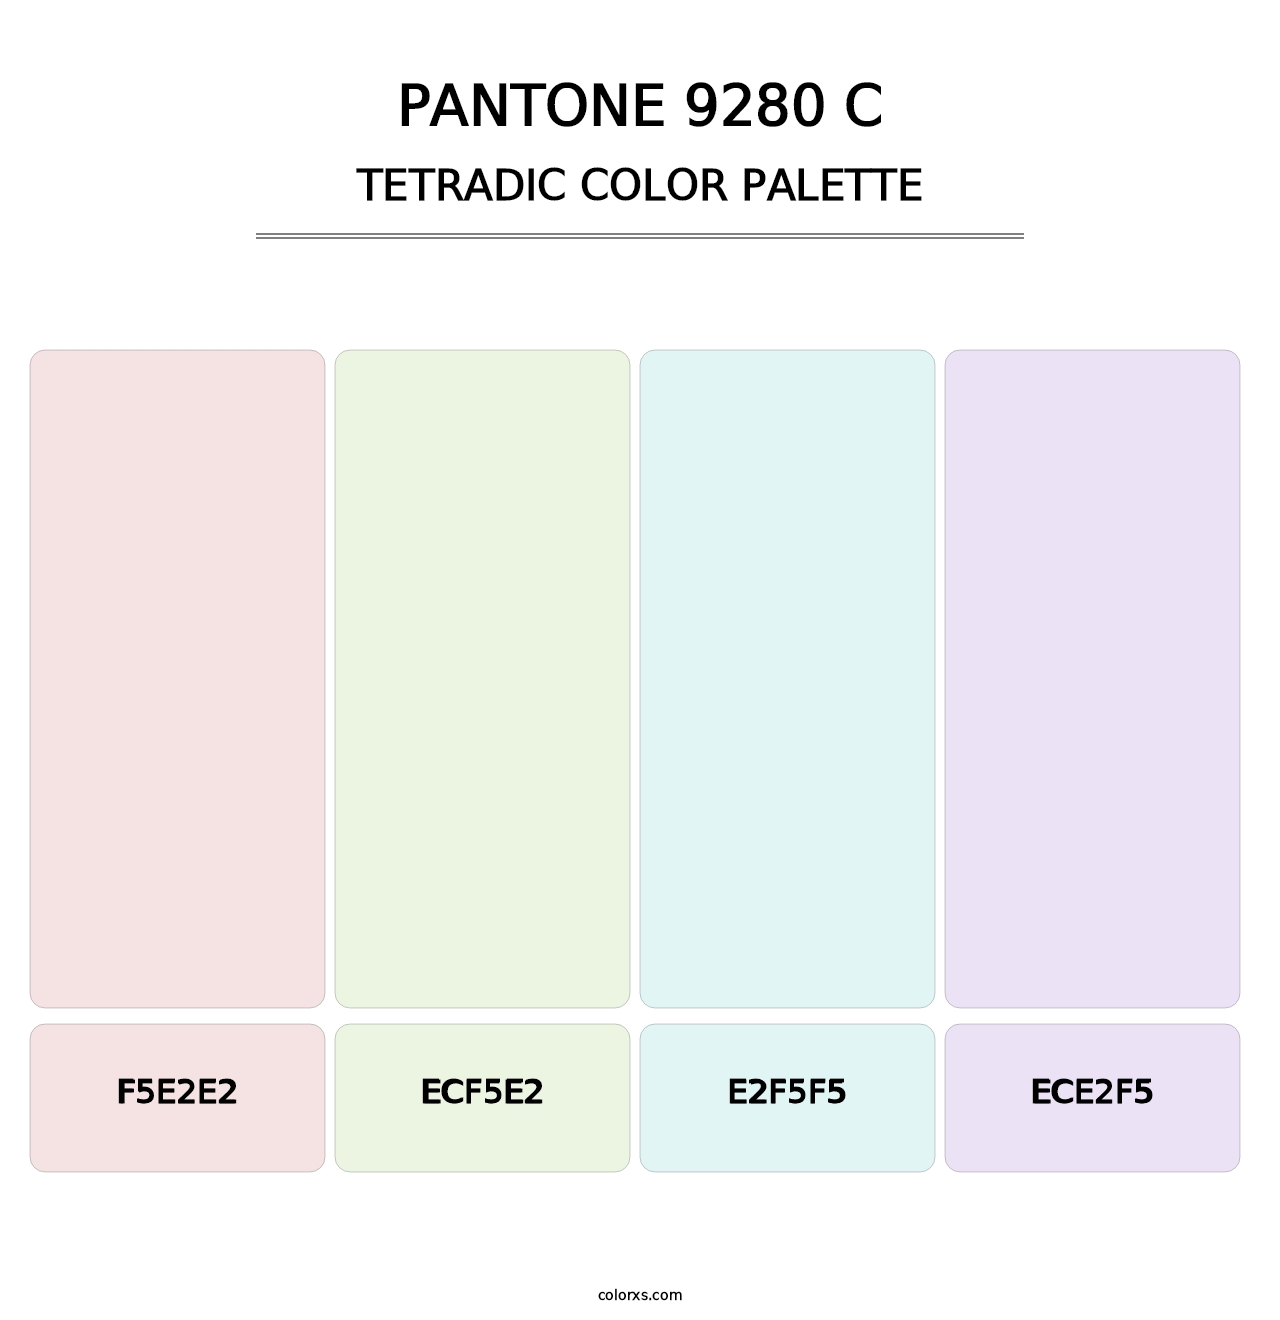 PANTONE 9280 C - Tetradic Color Palette